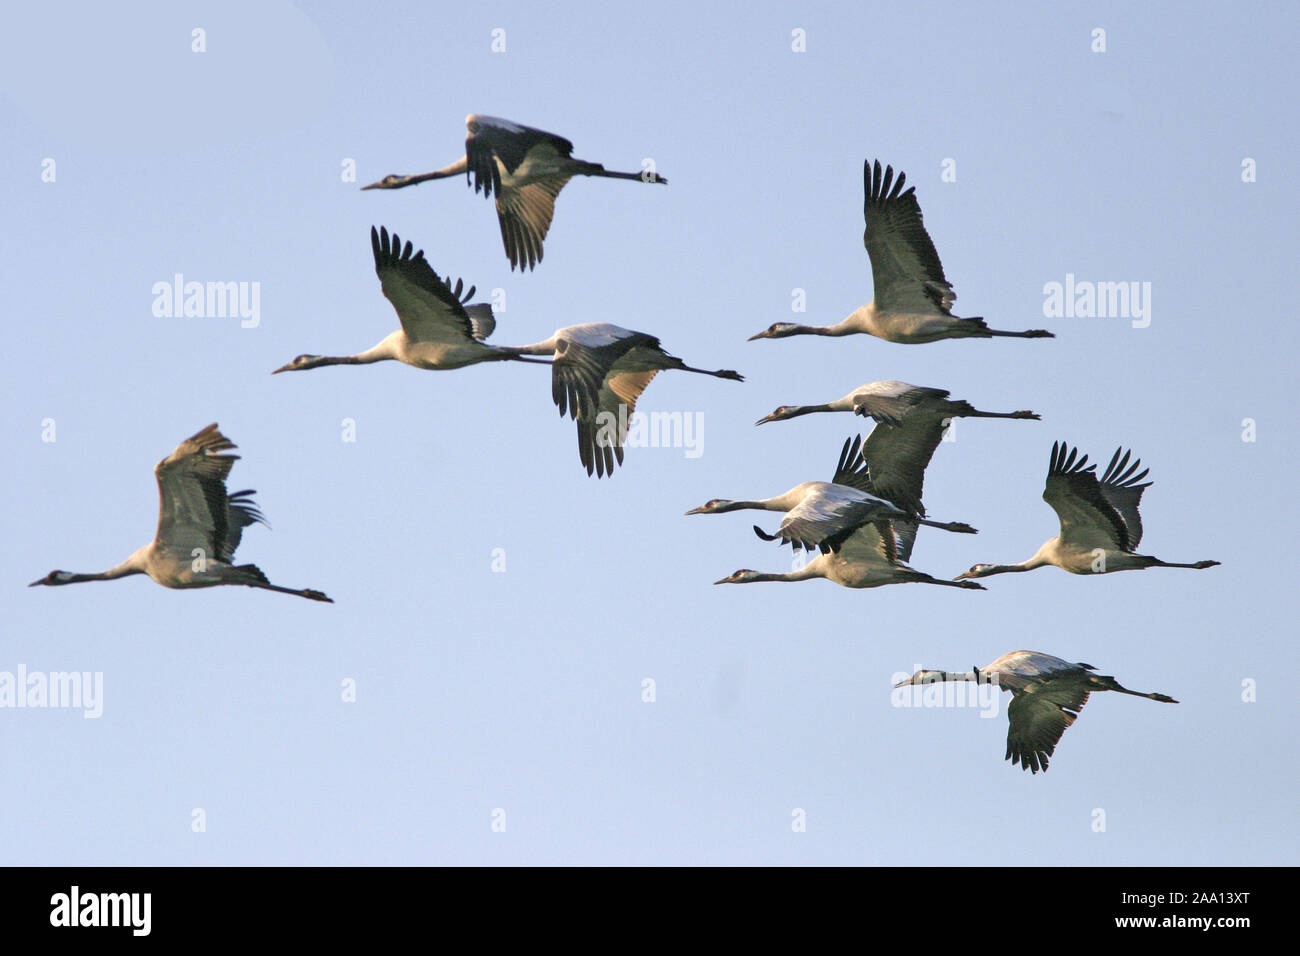 Fliegende Kraniche Grus Grus Flying Cranes Stock Photo Alamy